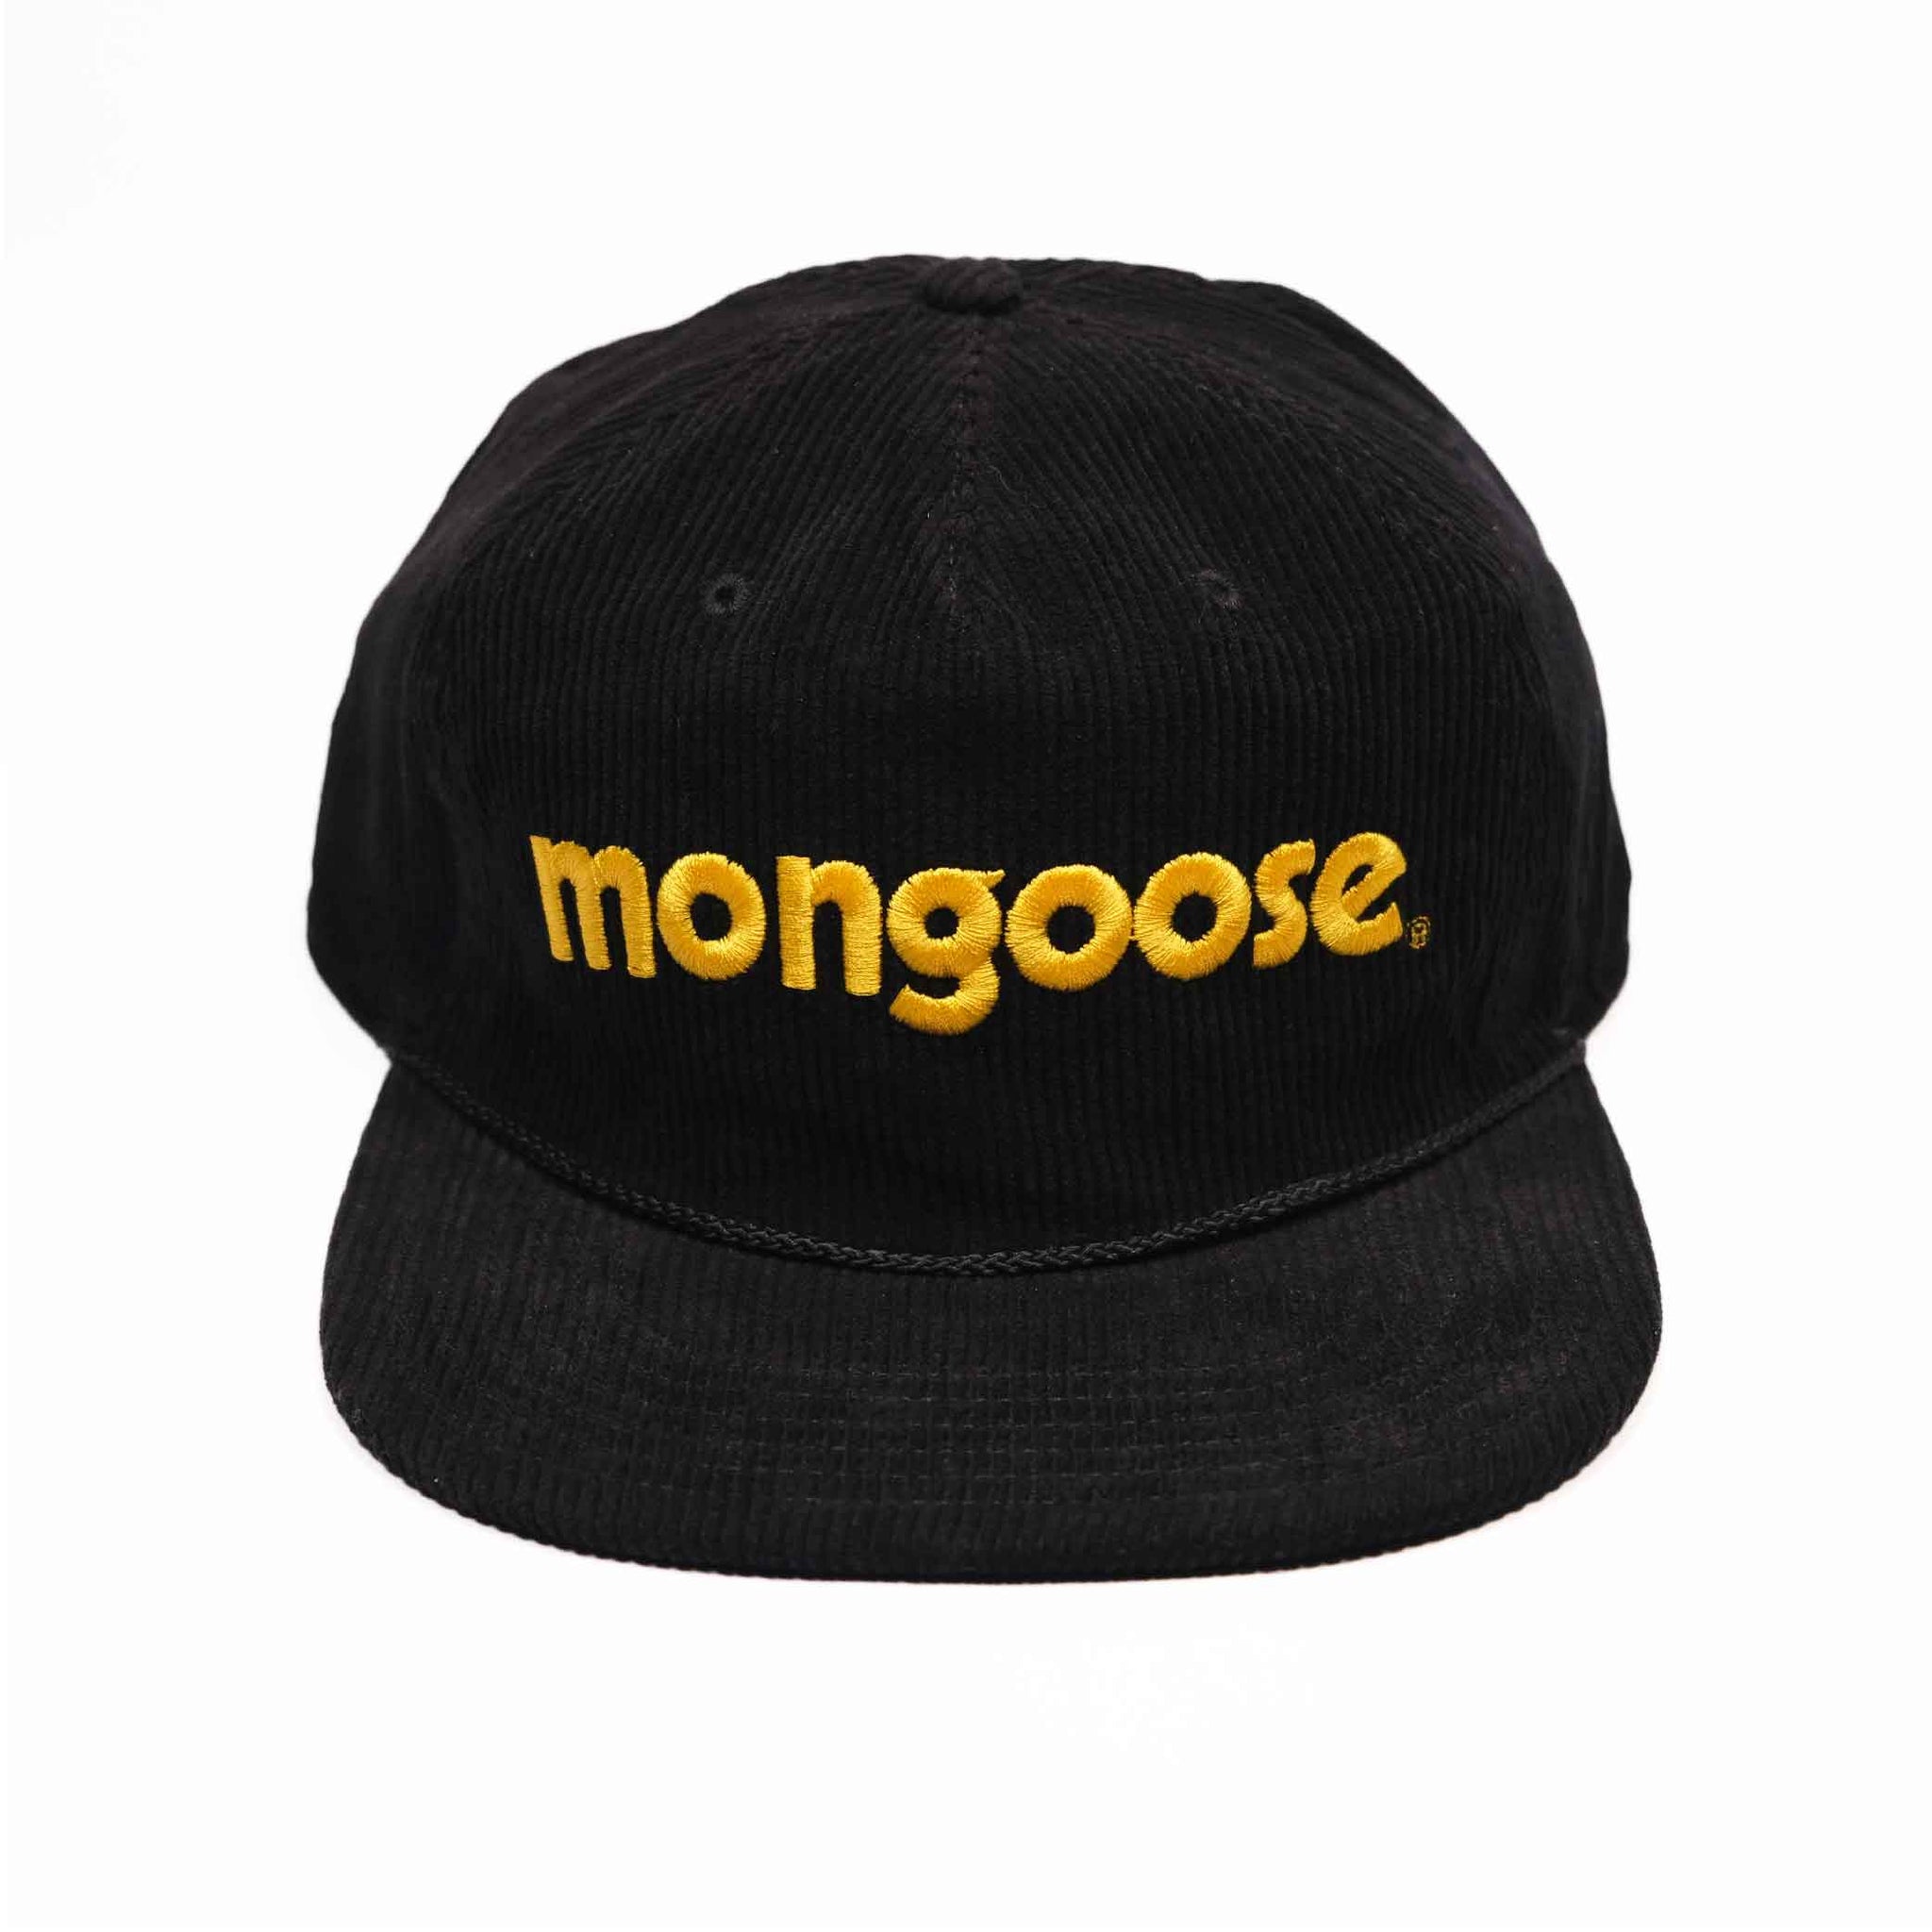 Mongoose Corduroy w/ Embroidery Hat - Black